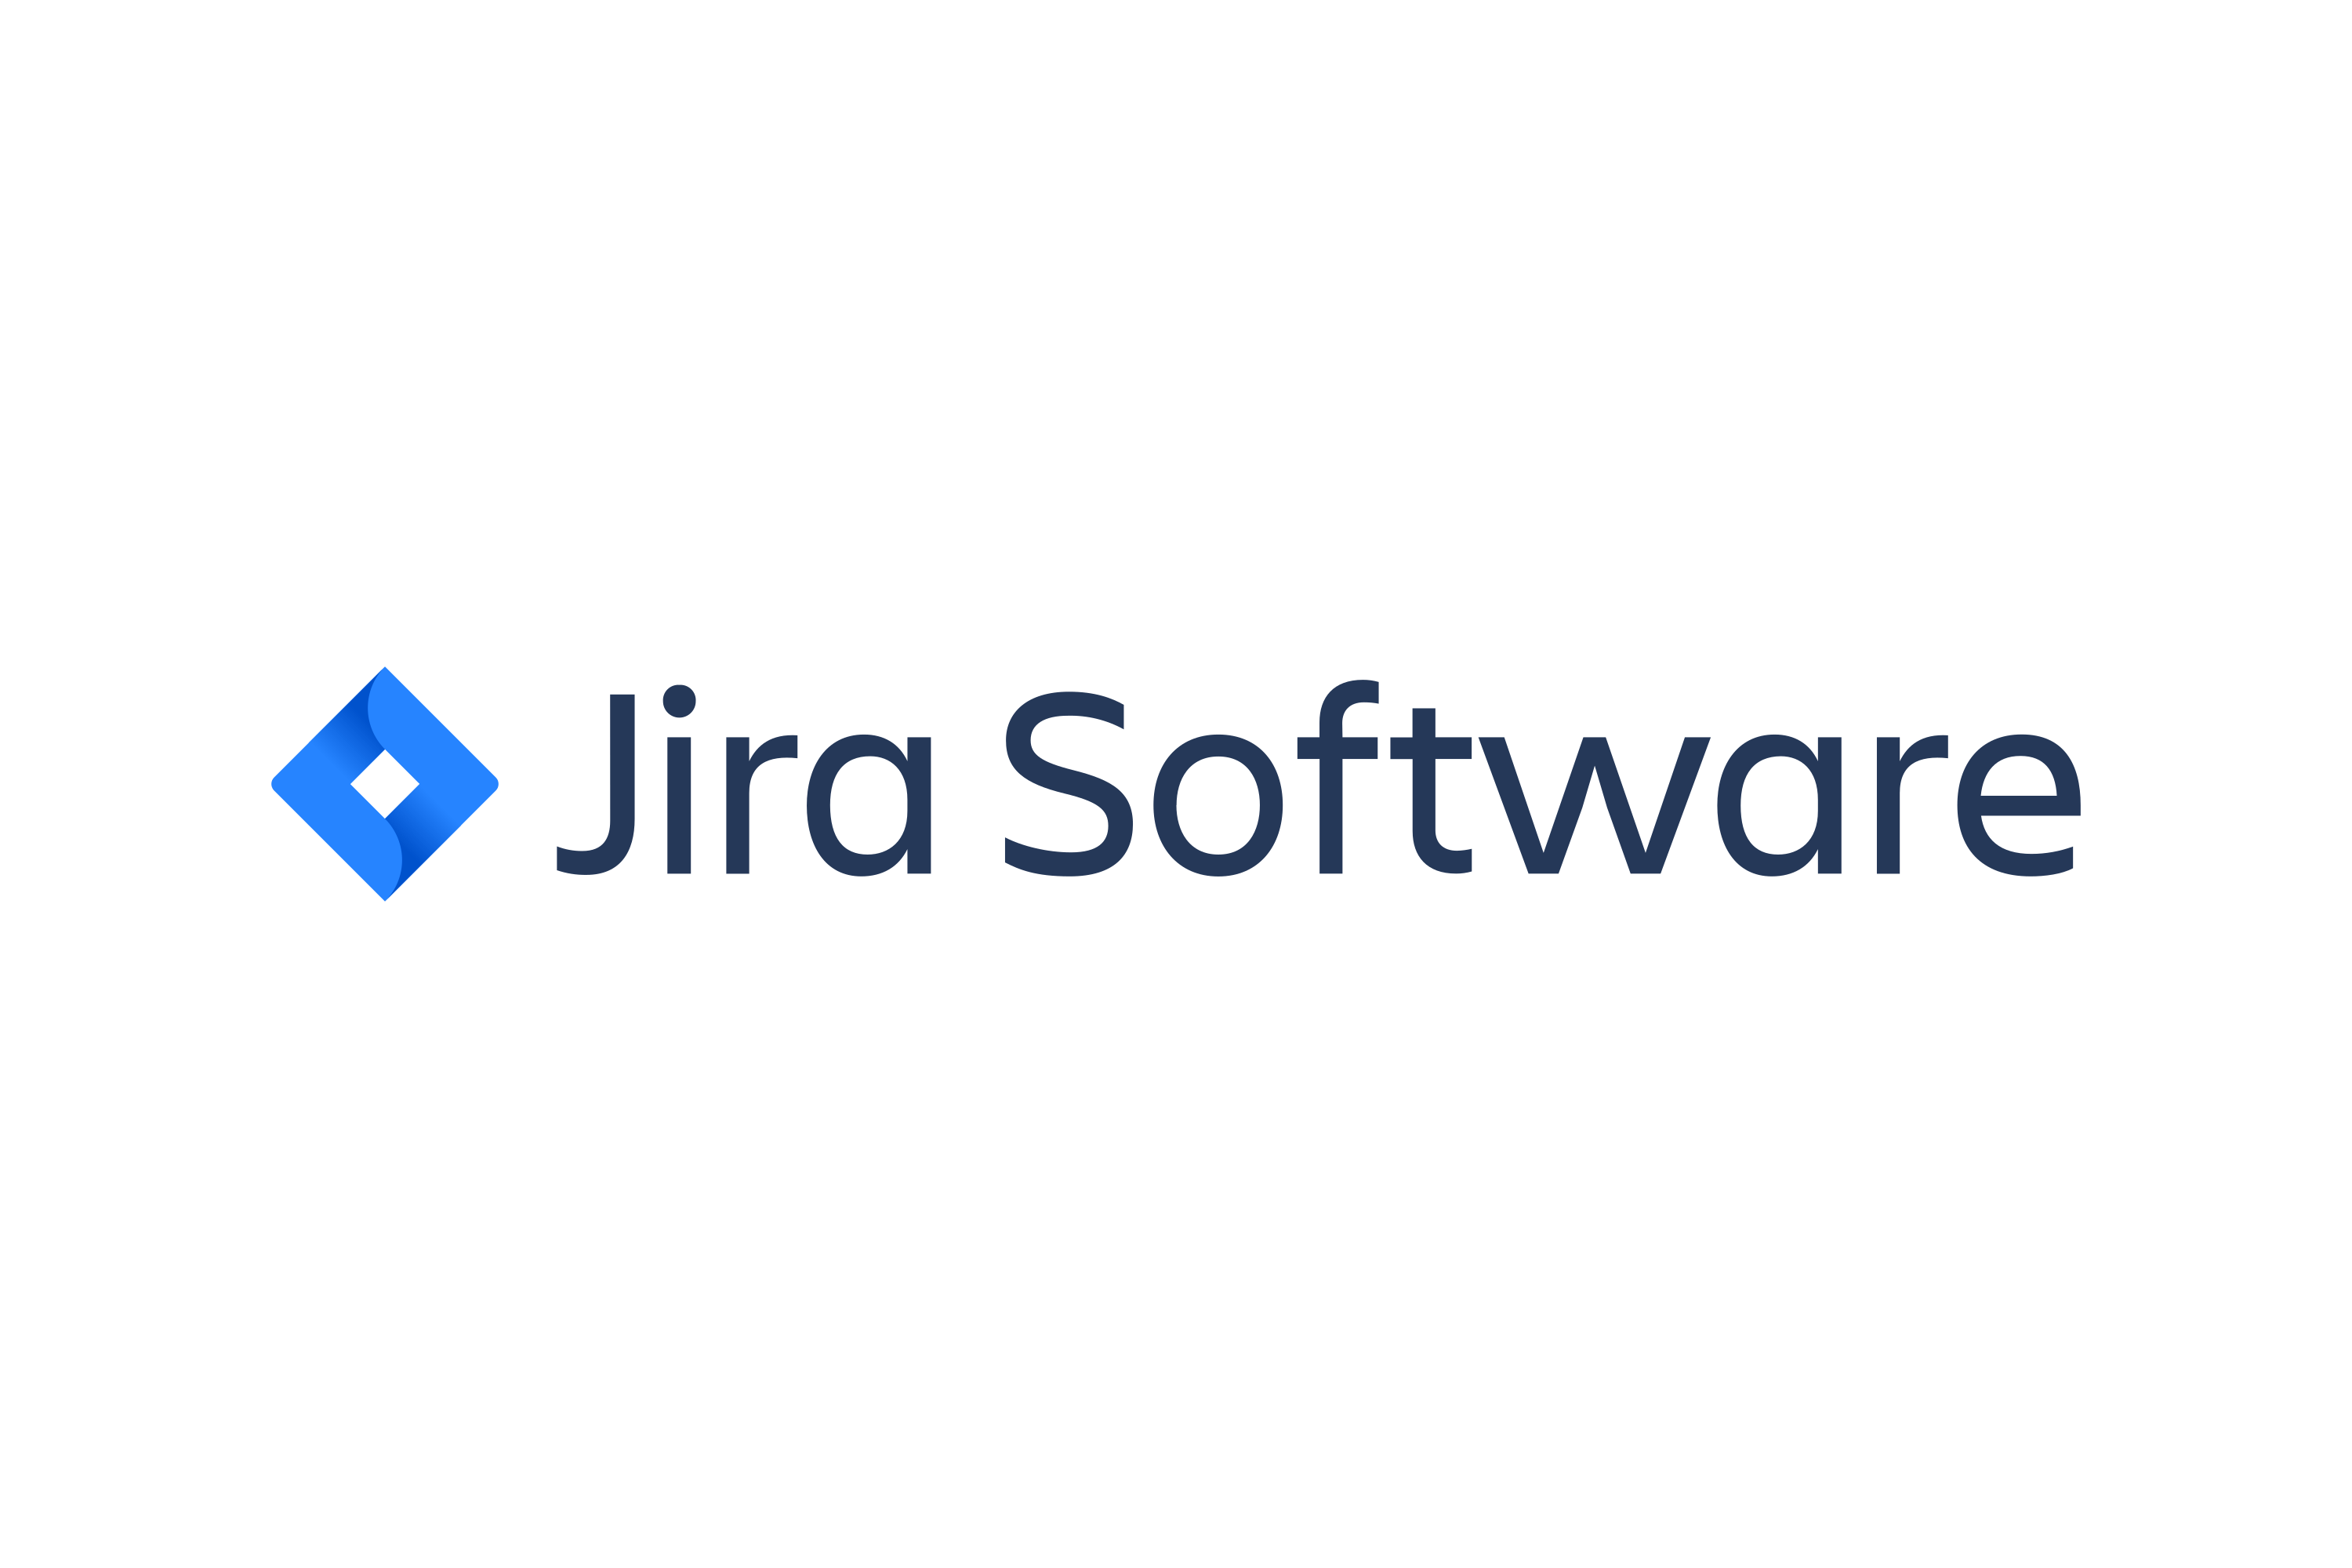 jira_full_logo